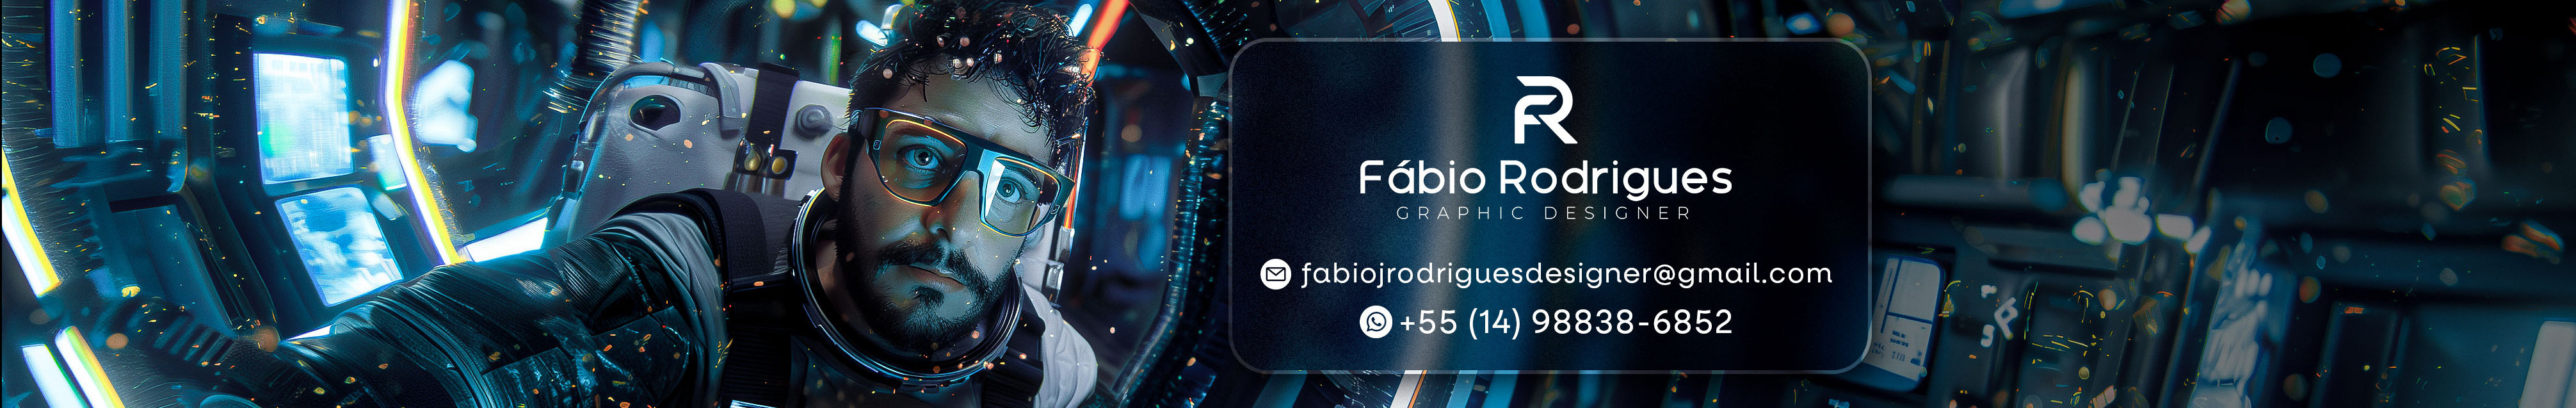 Fabio Rodrigues's profile banner